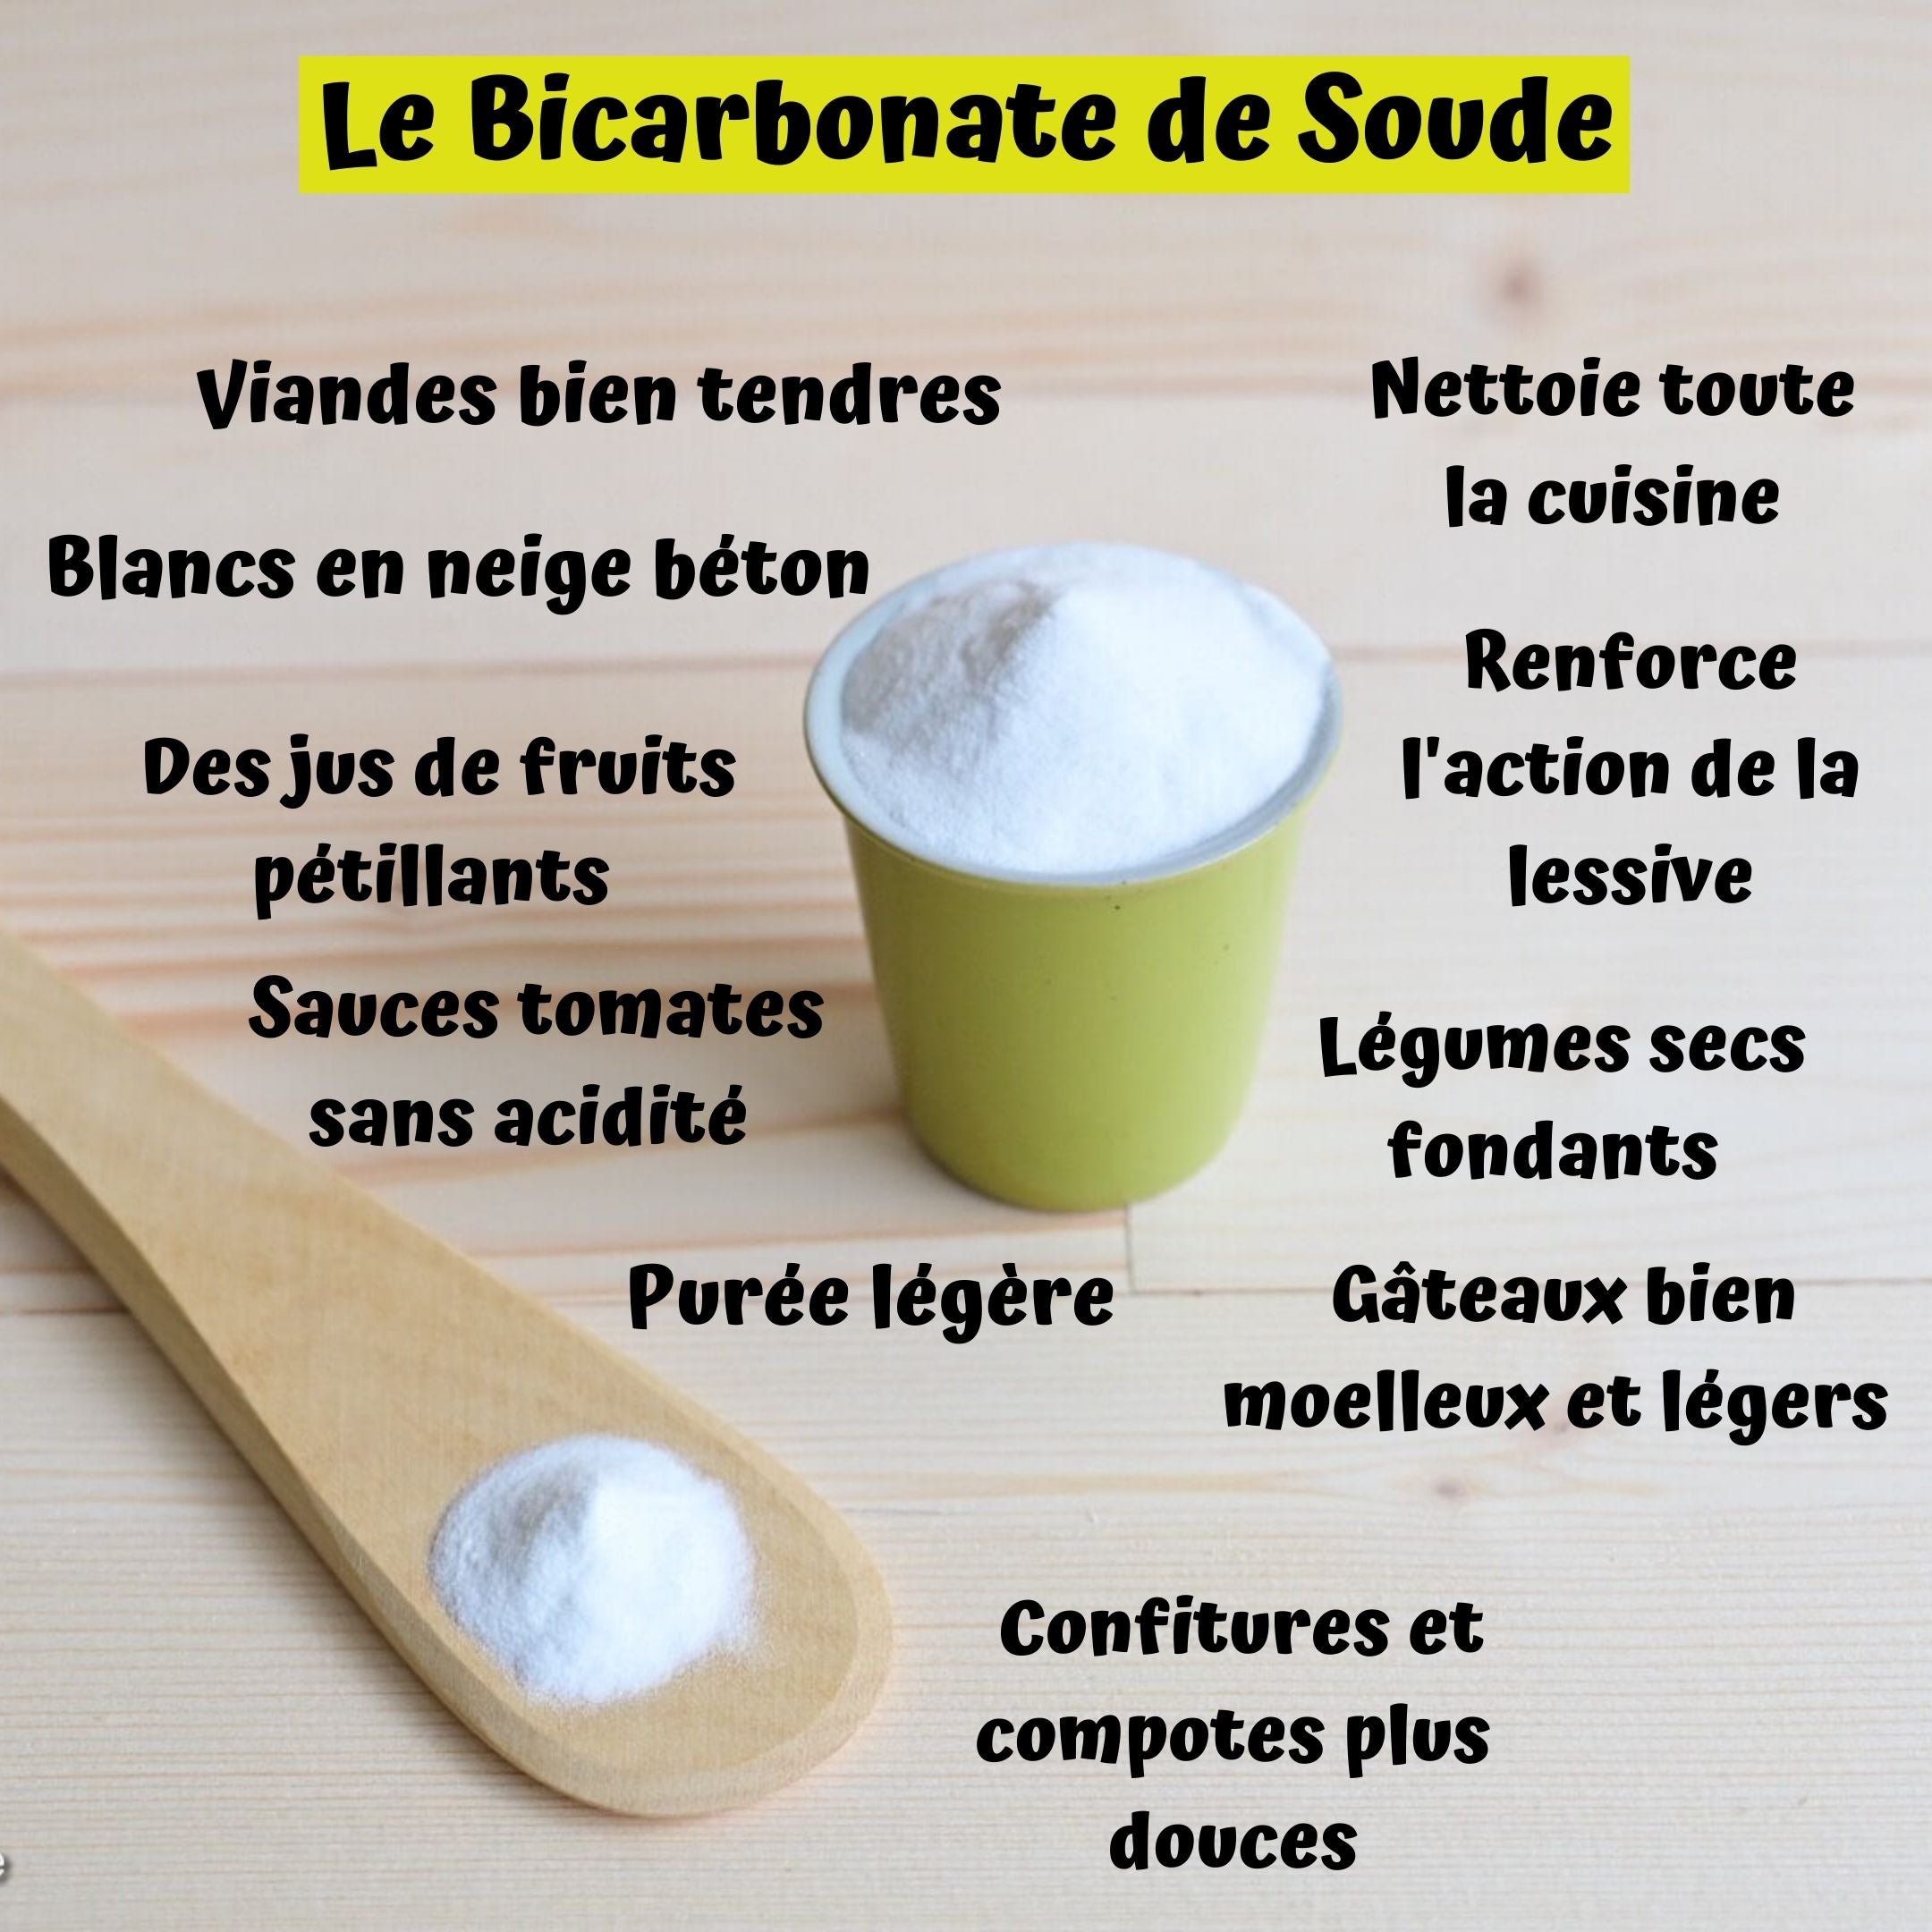 copy of Bicarbonate de soude alimentaire